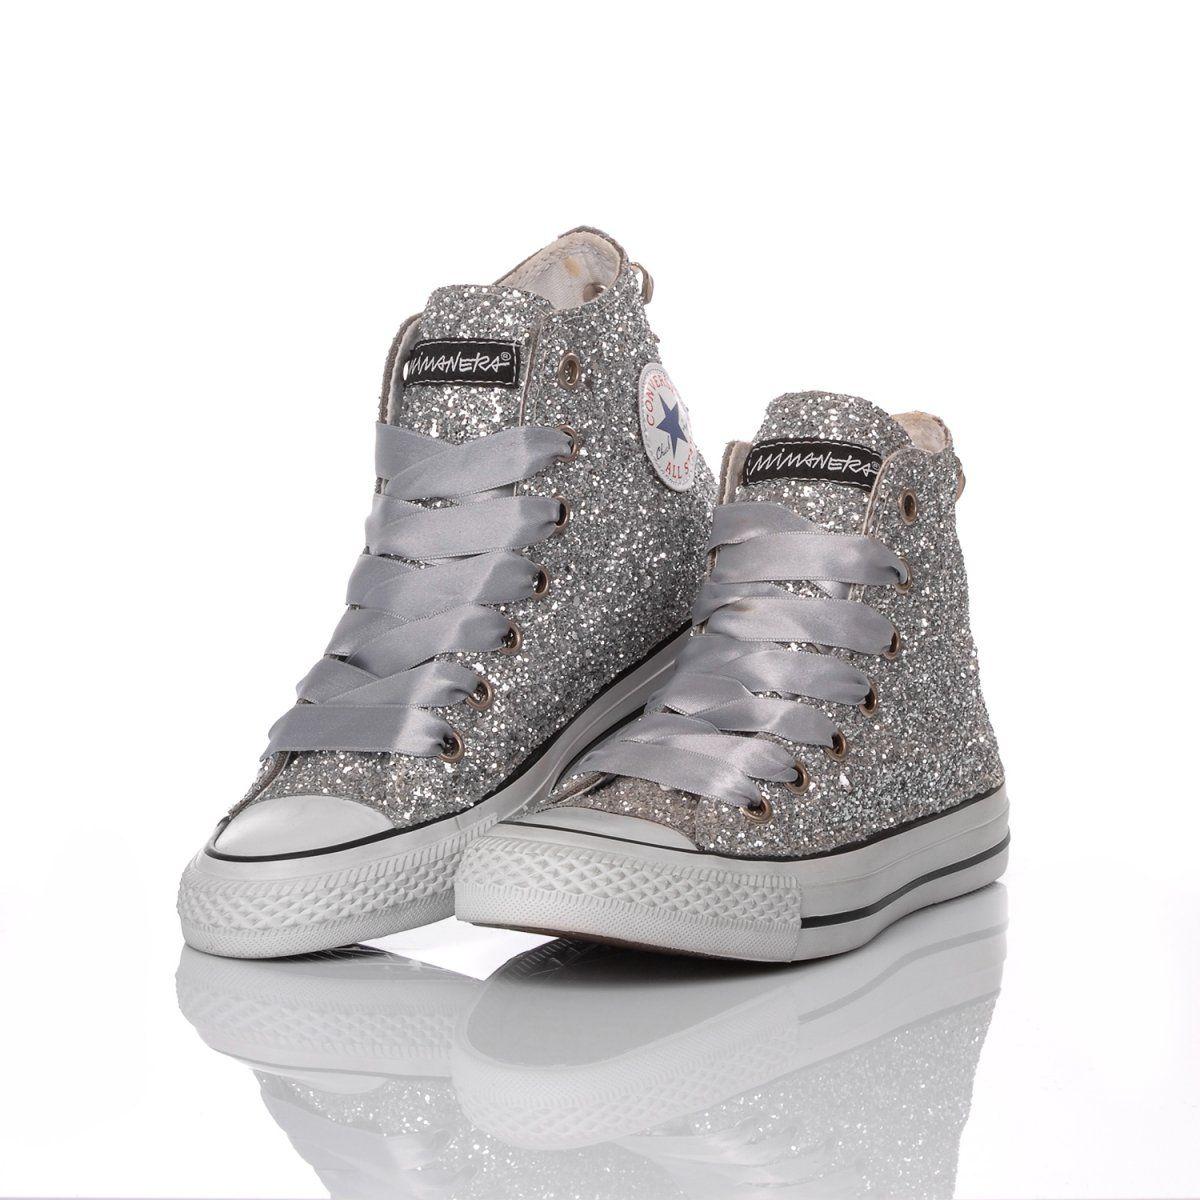 Converse Glitter Hi Top Sneakers in Silver (Metallic) - Save 38% | Lyst